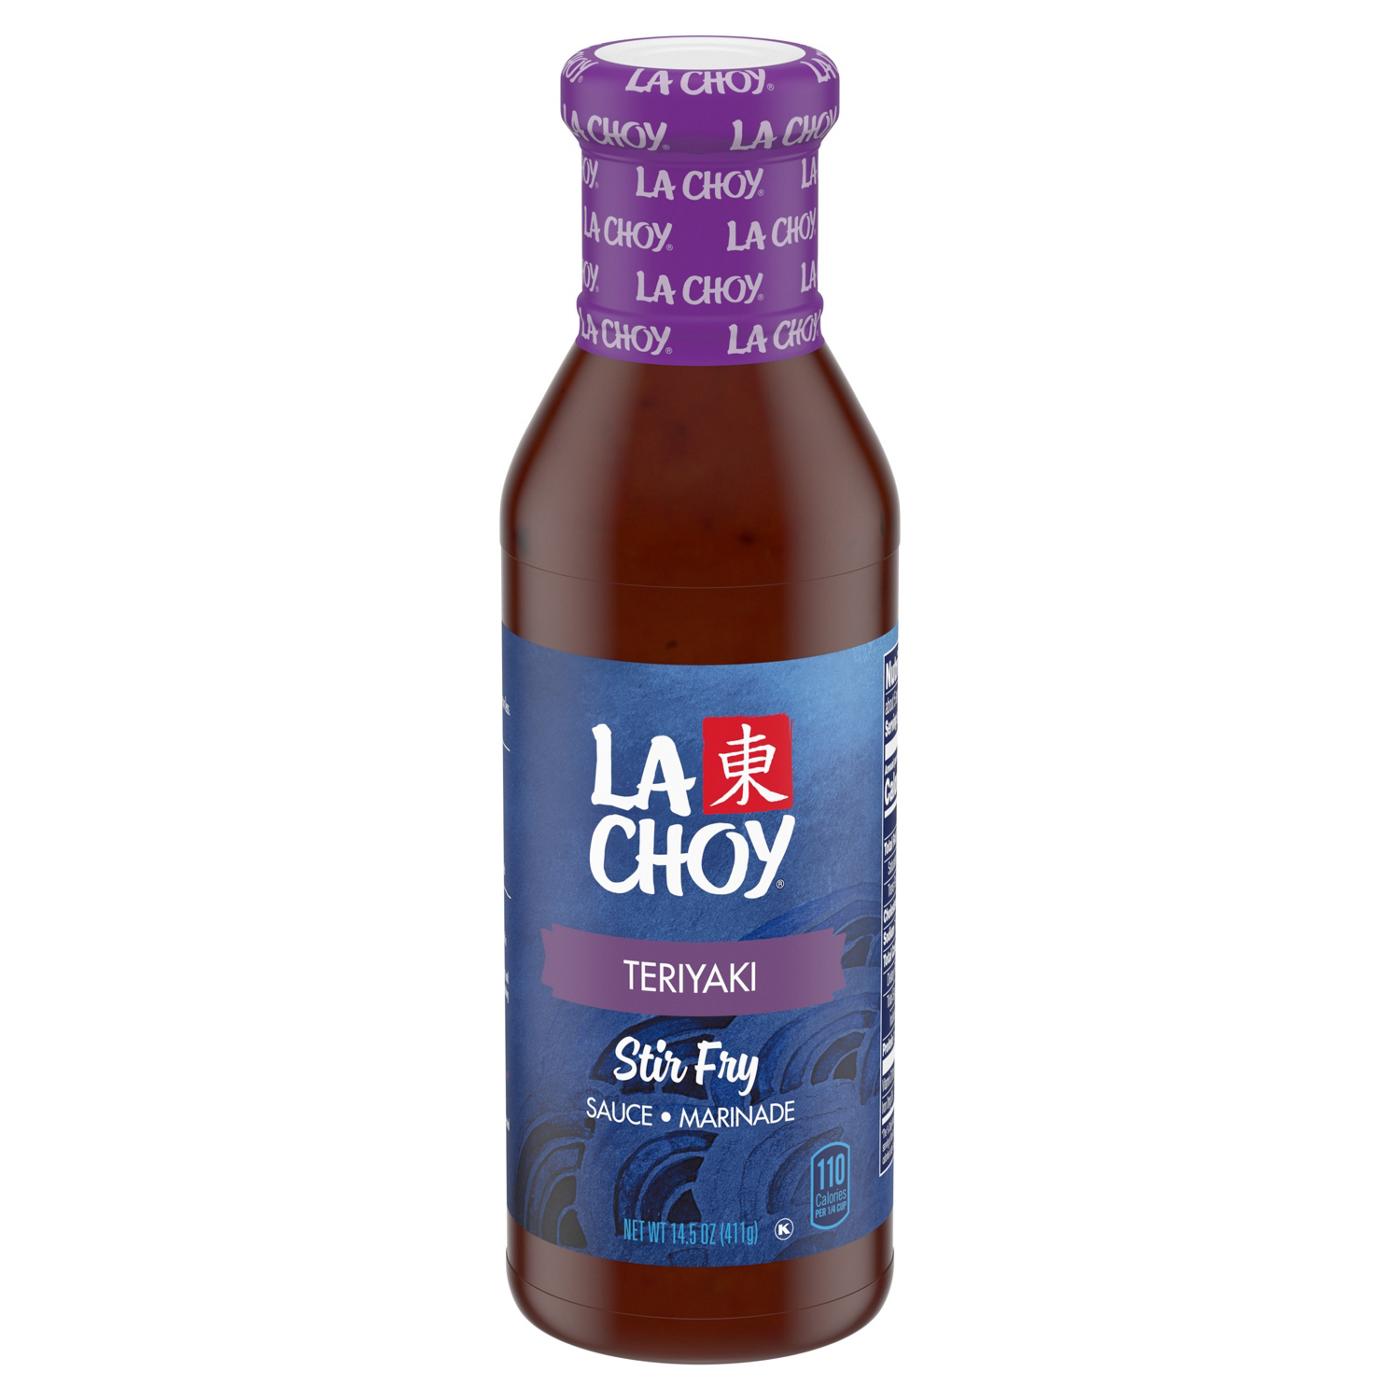 La Choy Teriyaki Stir Fry Sauce & Marinade - Shop Specialty Sauces at H-E-B